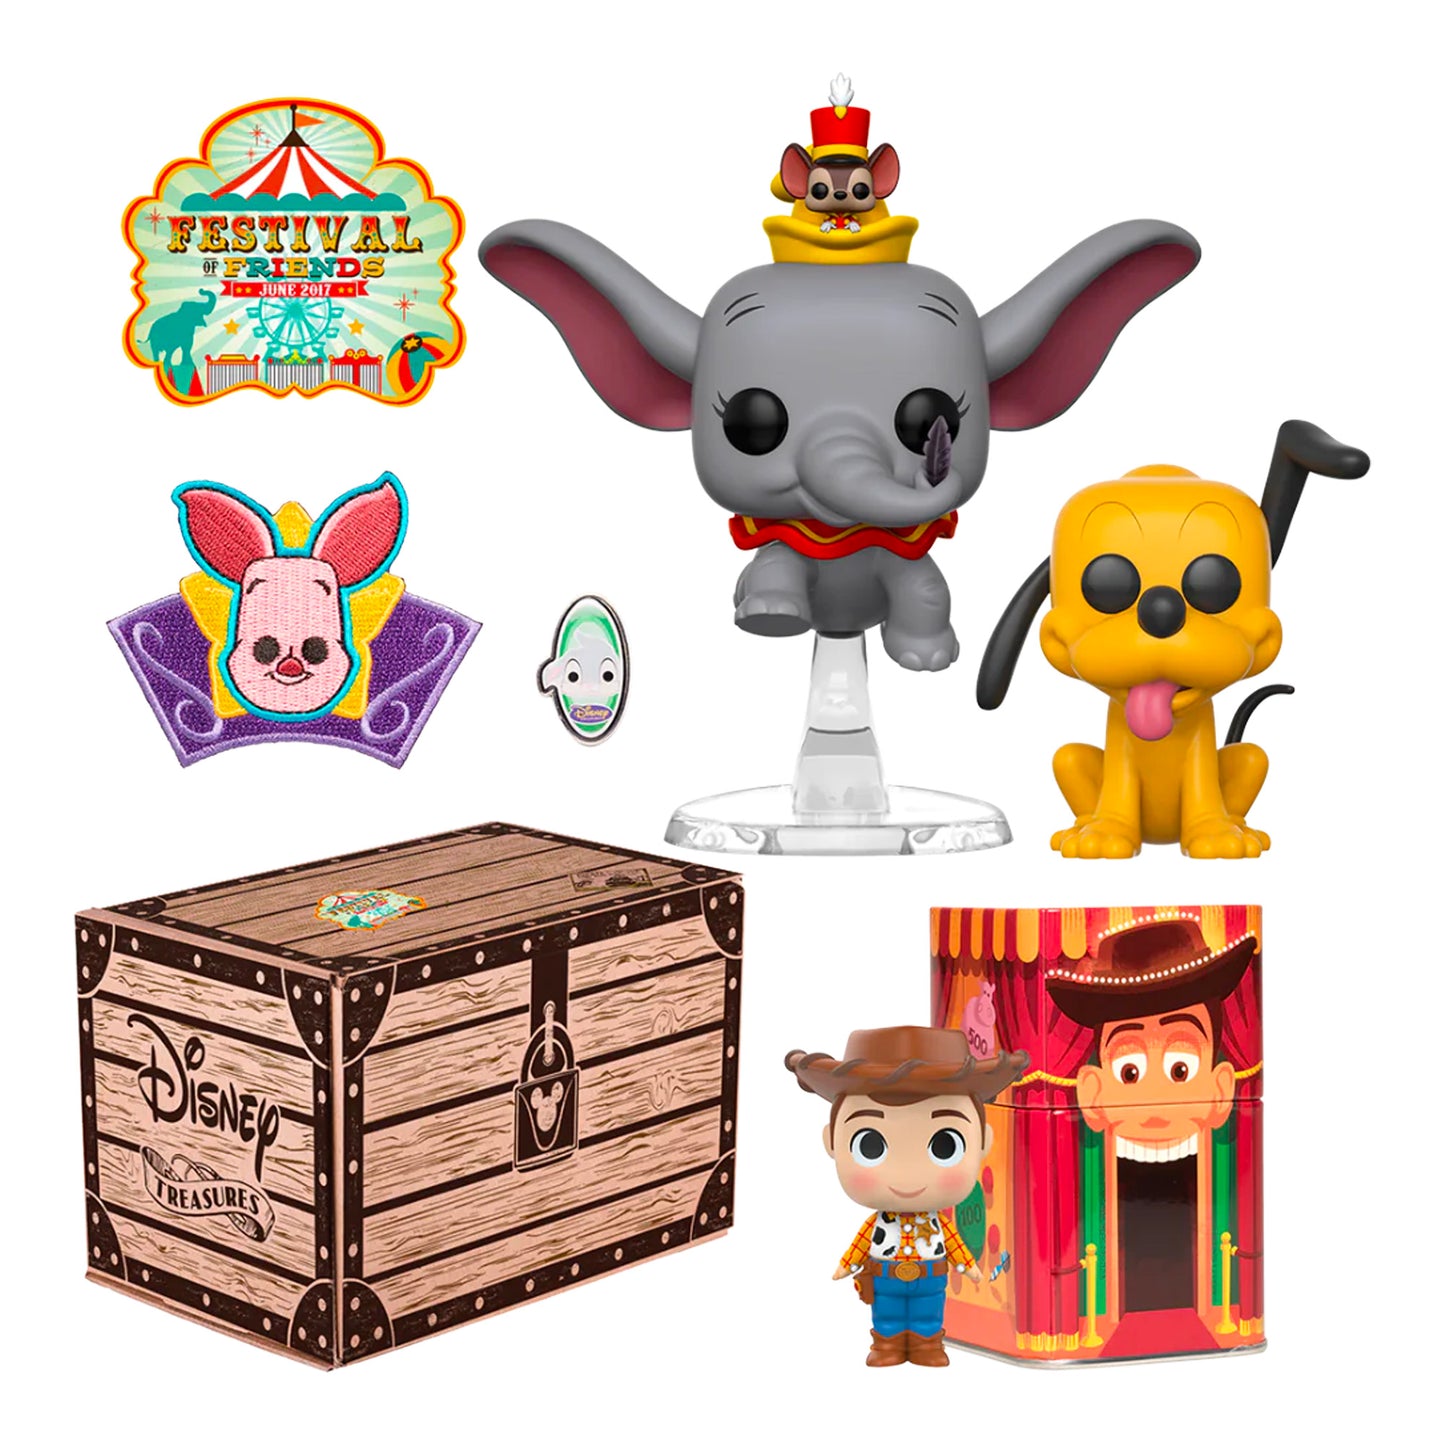 Funko Pop! Disney: Treasure Box - Dumbo and Pluto Pop Set